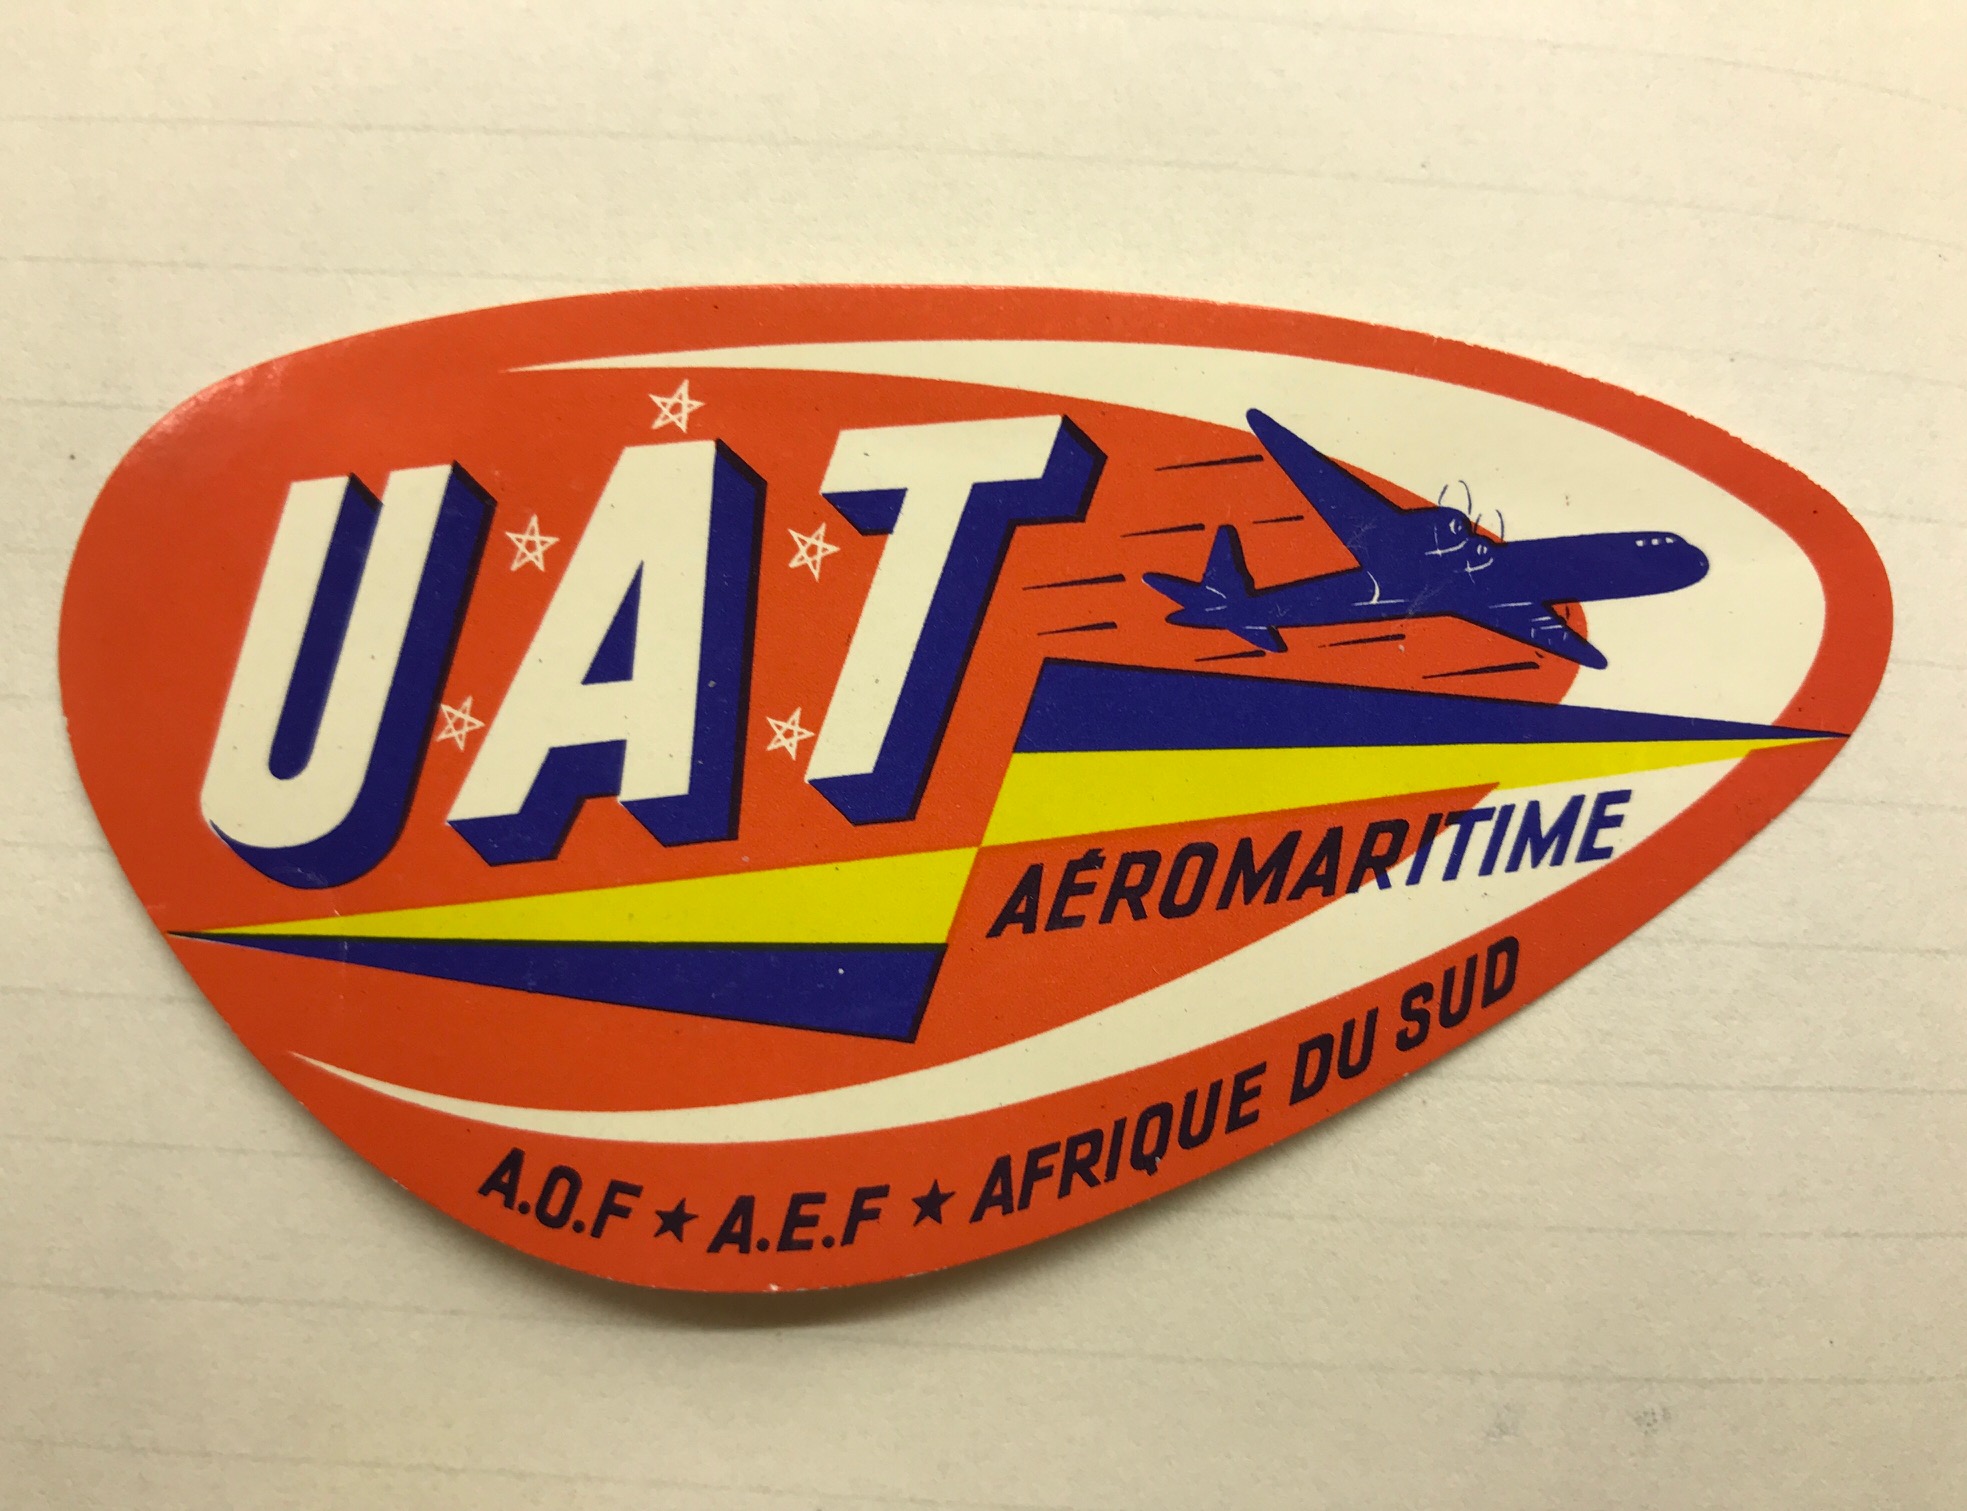 Trevor's Stickies: Union Aeromaritime de Transport. A short-lived French airline. 1949-1963.